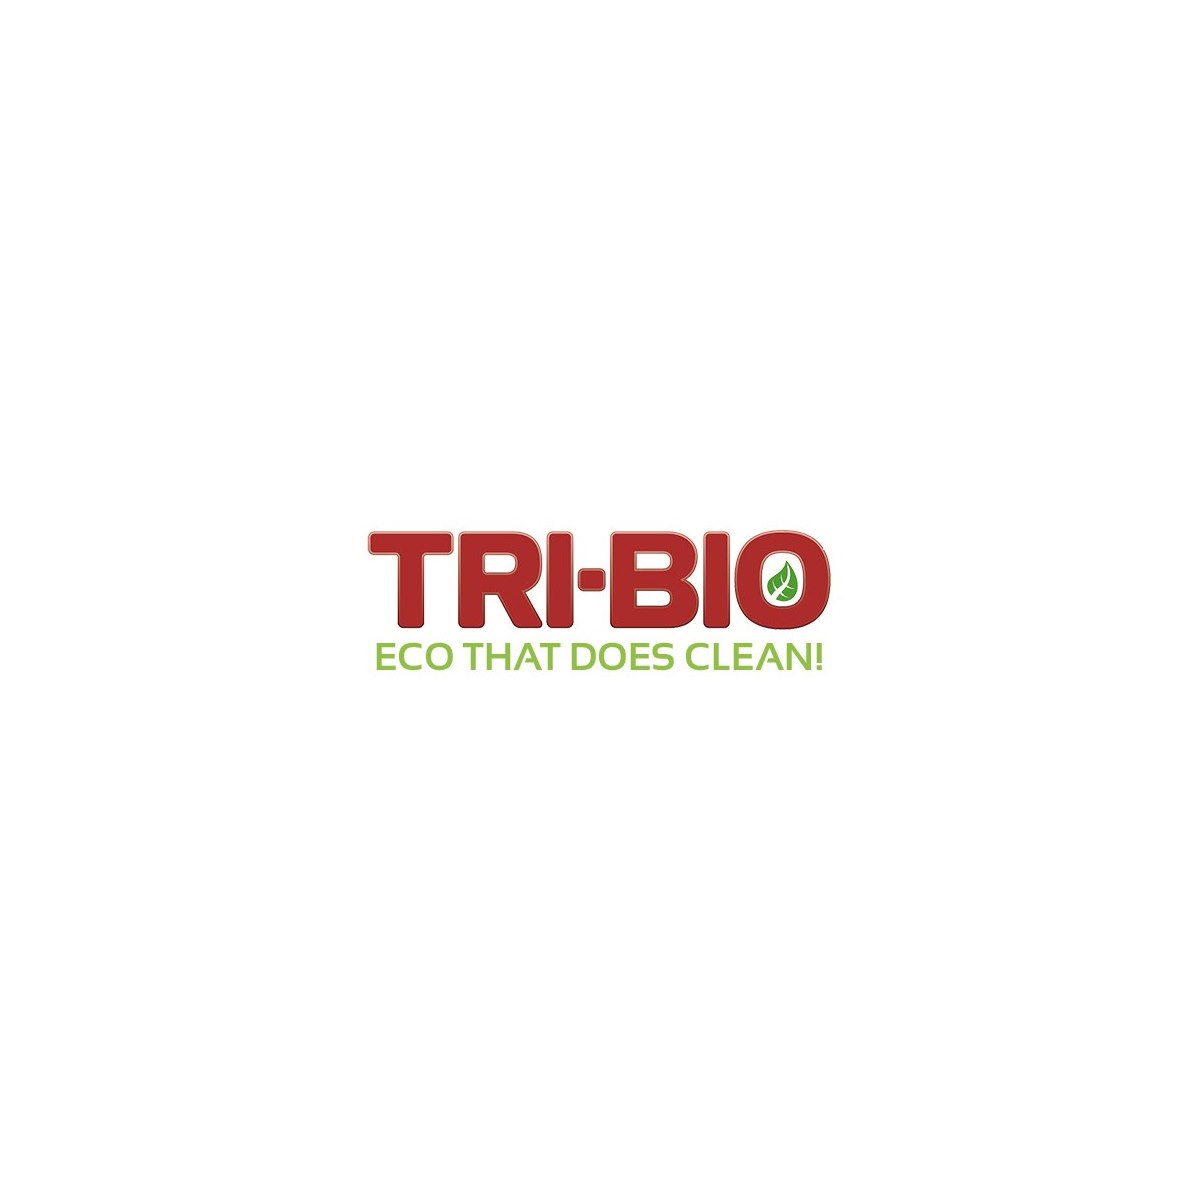 Tri Bio Products